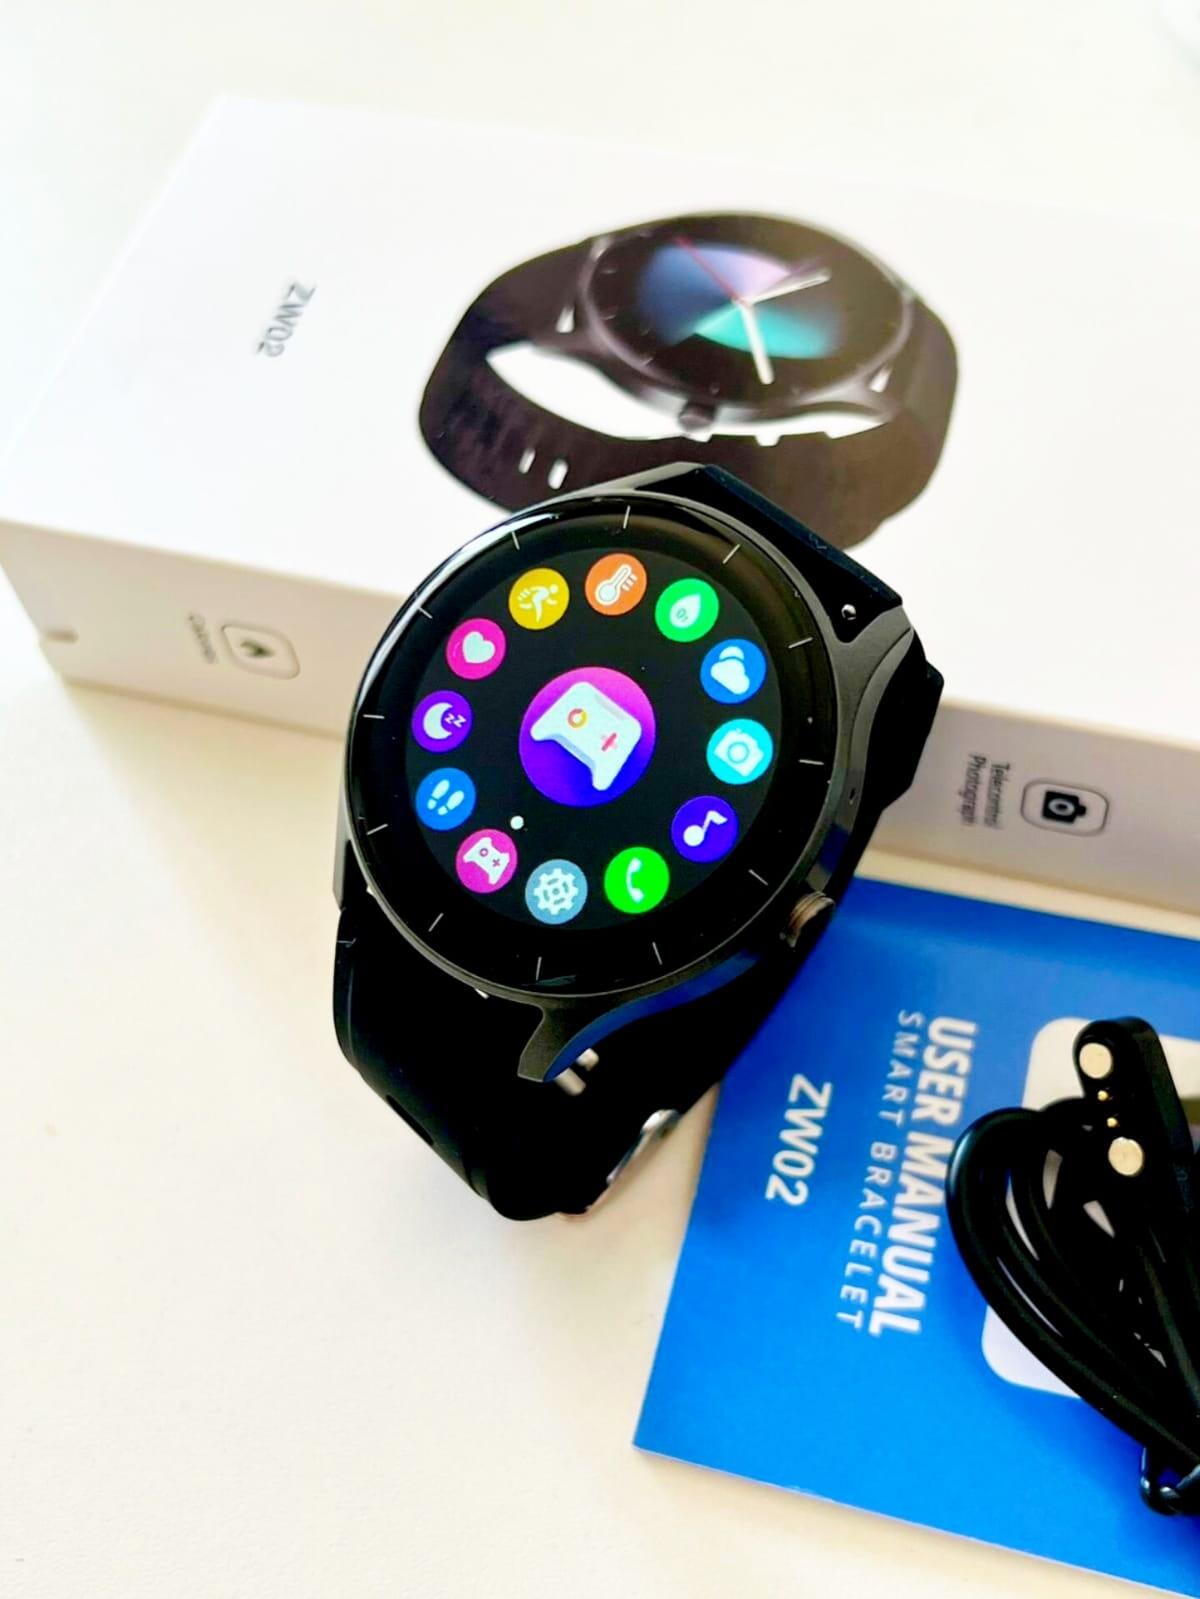 Relogio inteligente Smartwatch Zw-02 preto a prova dagua